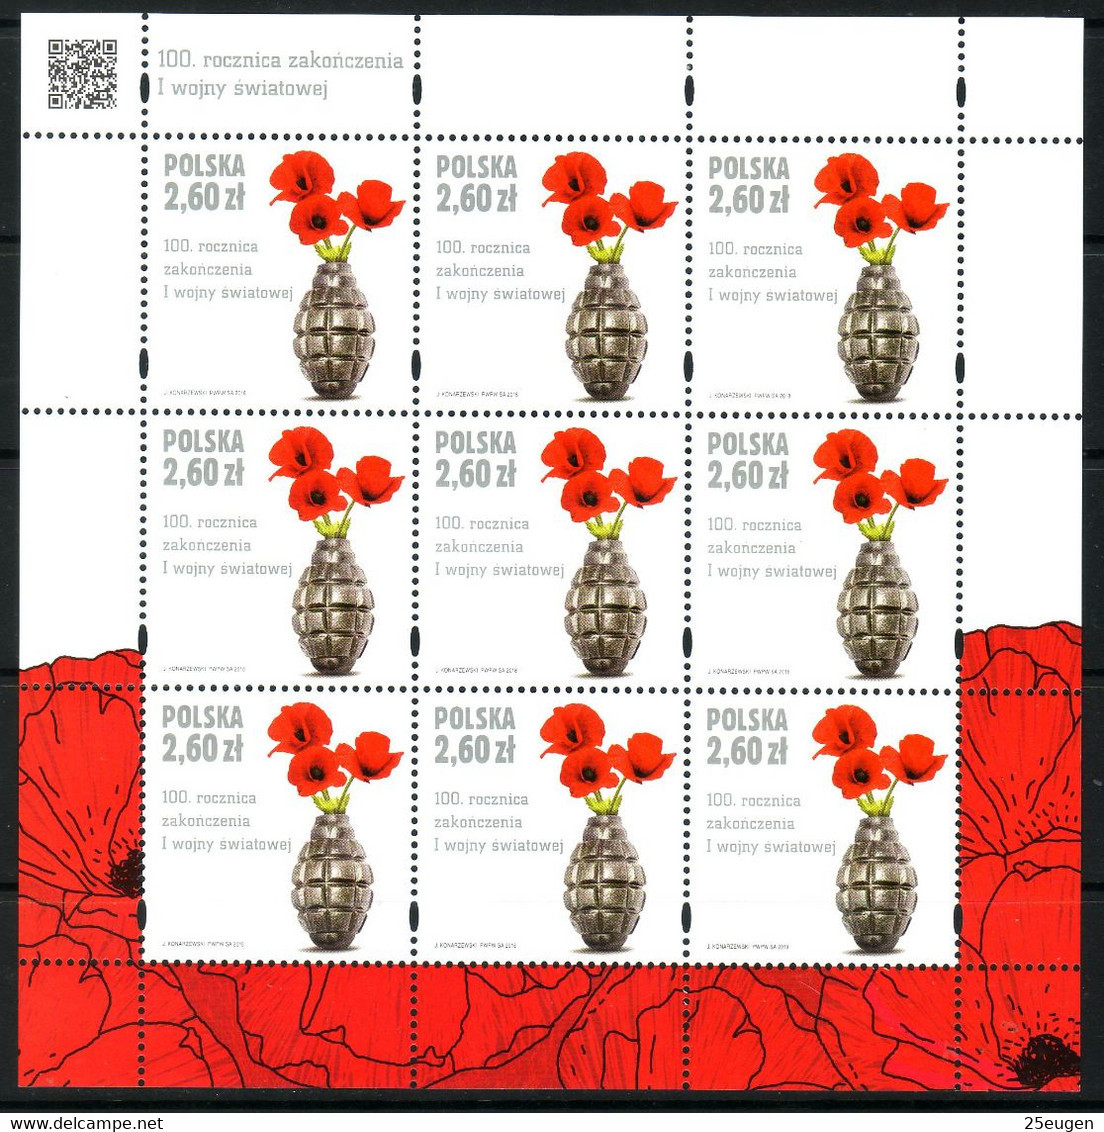 POLAND 2018 Michel No 5053 Klbg  MNH - Unused Stamps